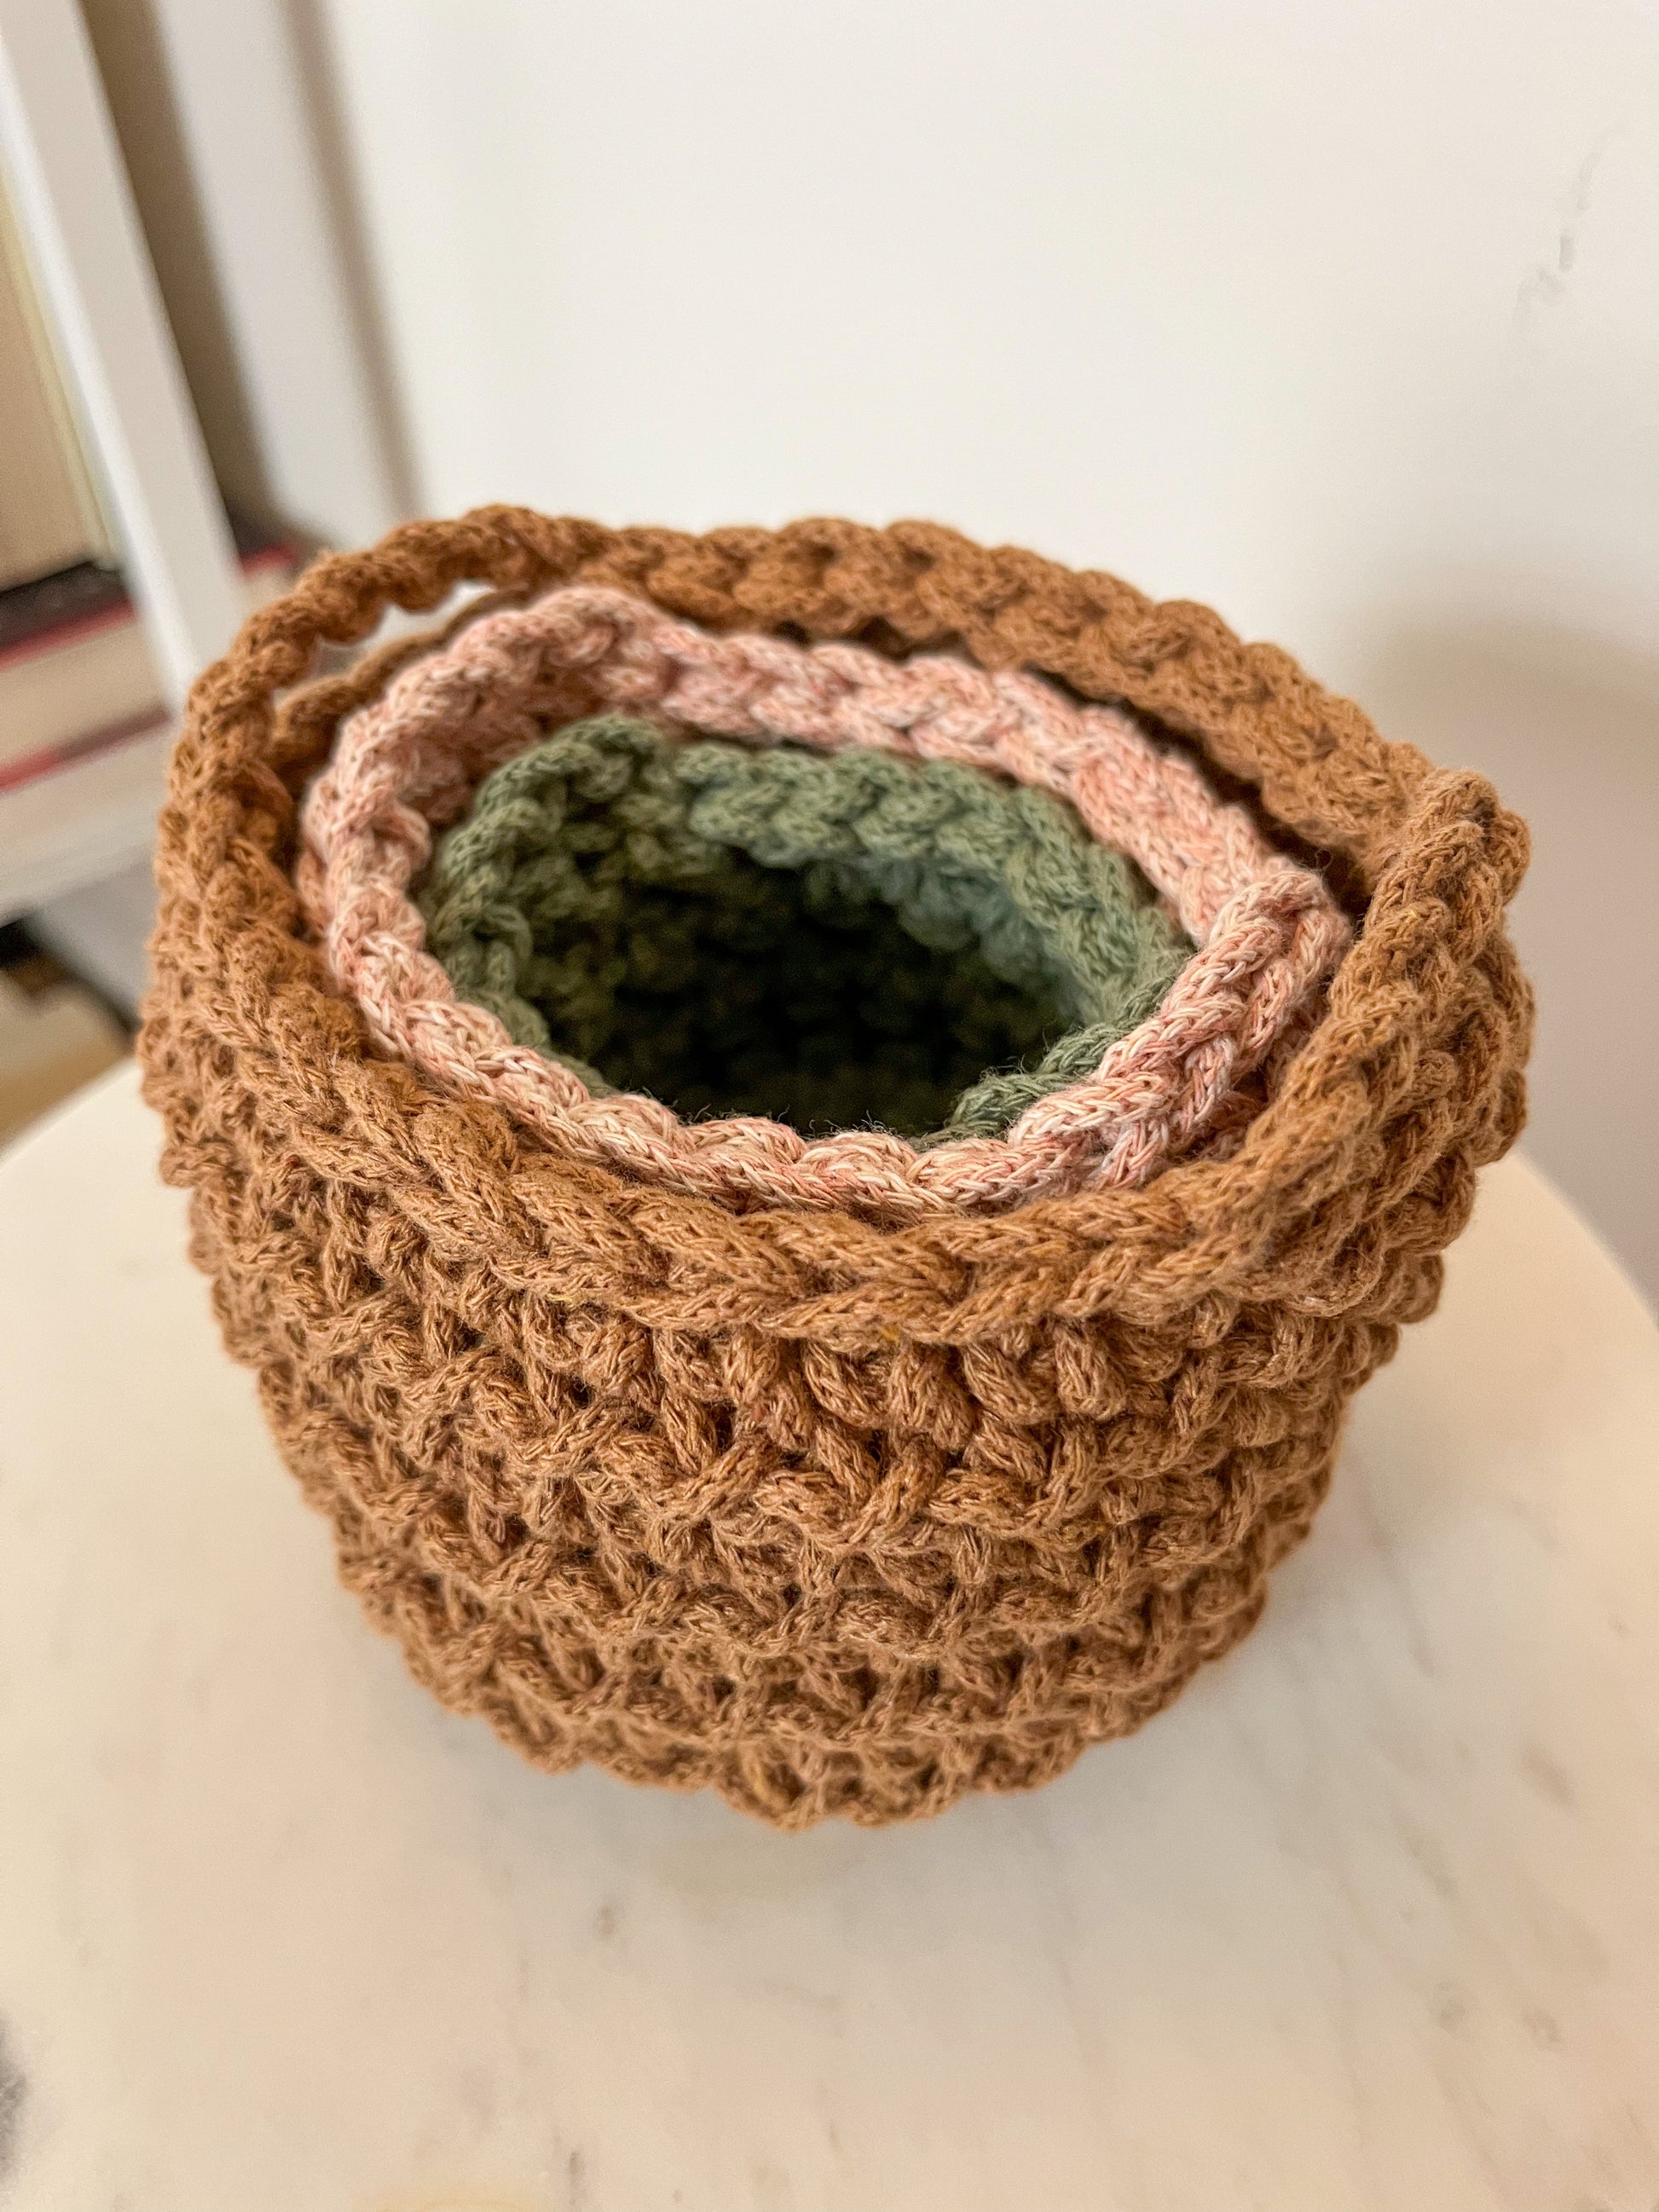 Nesting Baskets by Annie - 810233043503